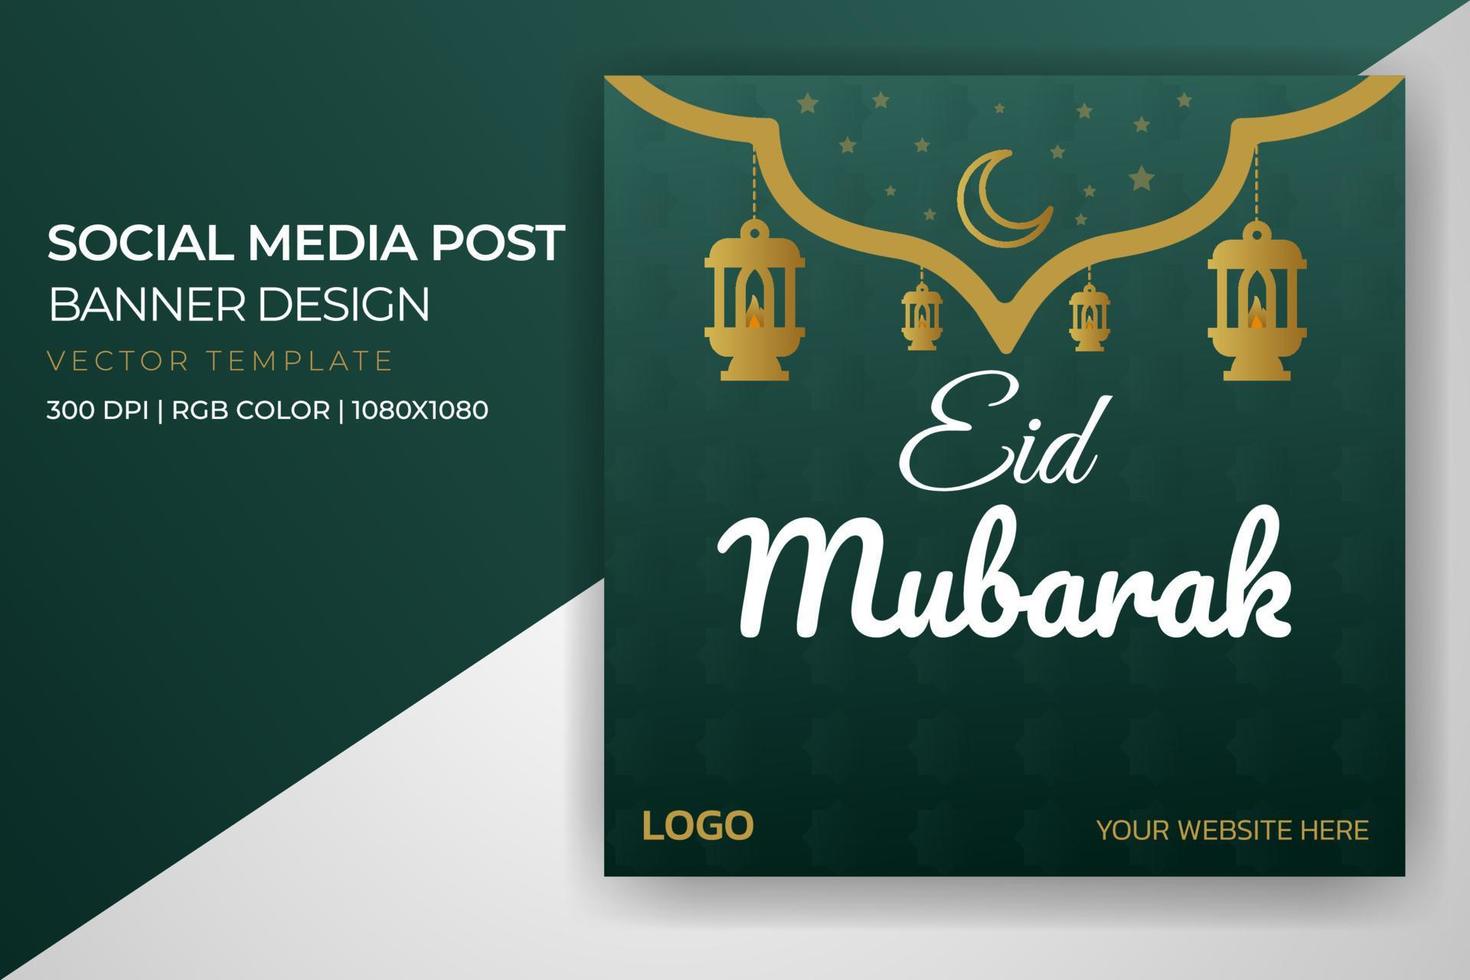 Eid Mubarak Ramadan Eid Ul Fitr Eid Ul Adha Social Media Post Wish Muslim Banner Design Template Free Download vector